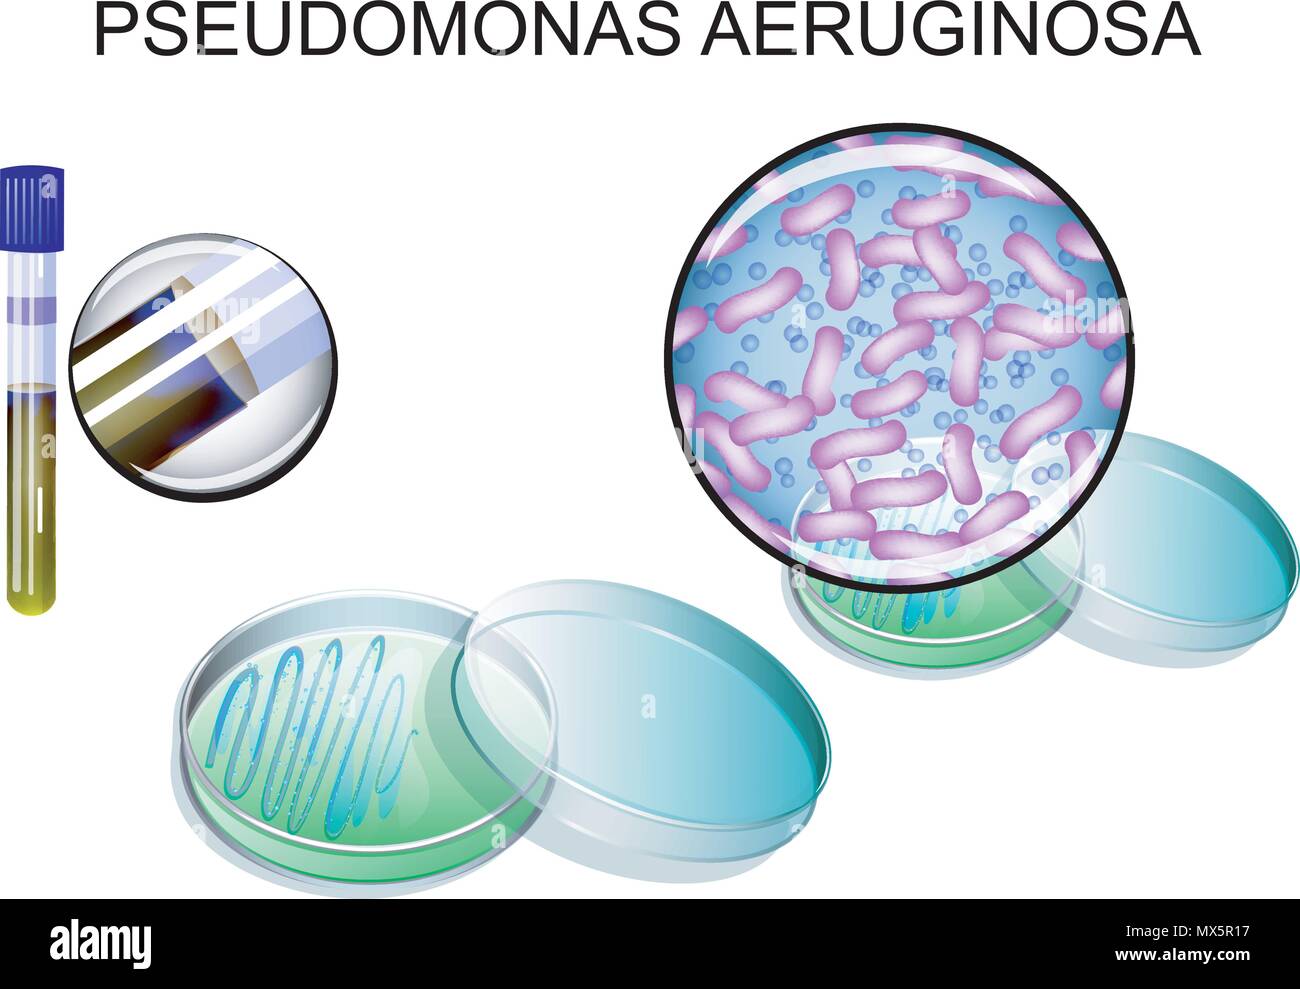 illustration of Petri dishes with sowing superbugs - Pseudomonas aeruginosa Stock Vector